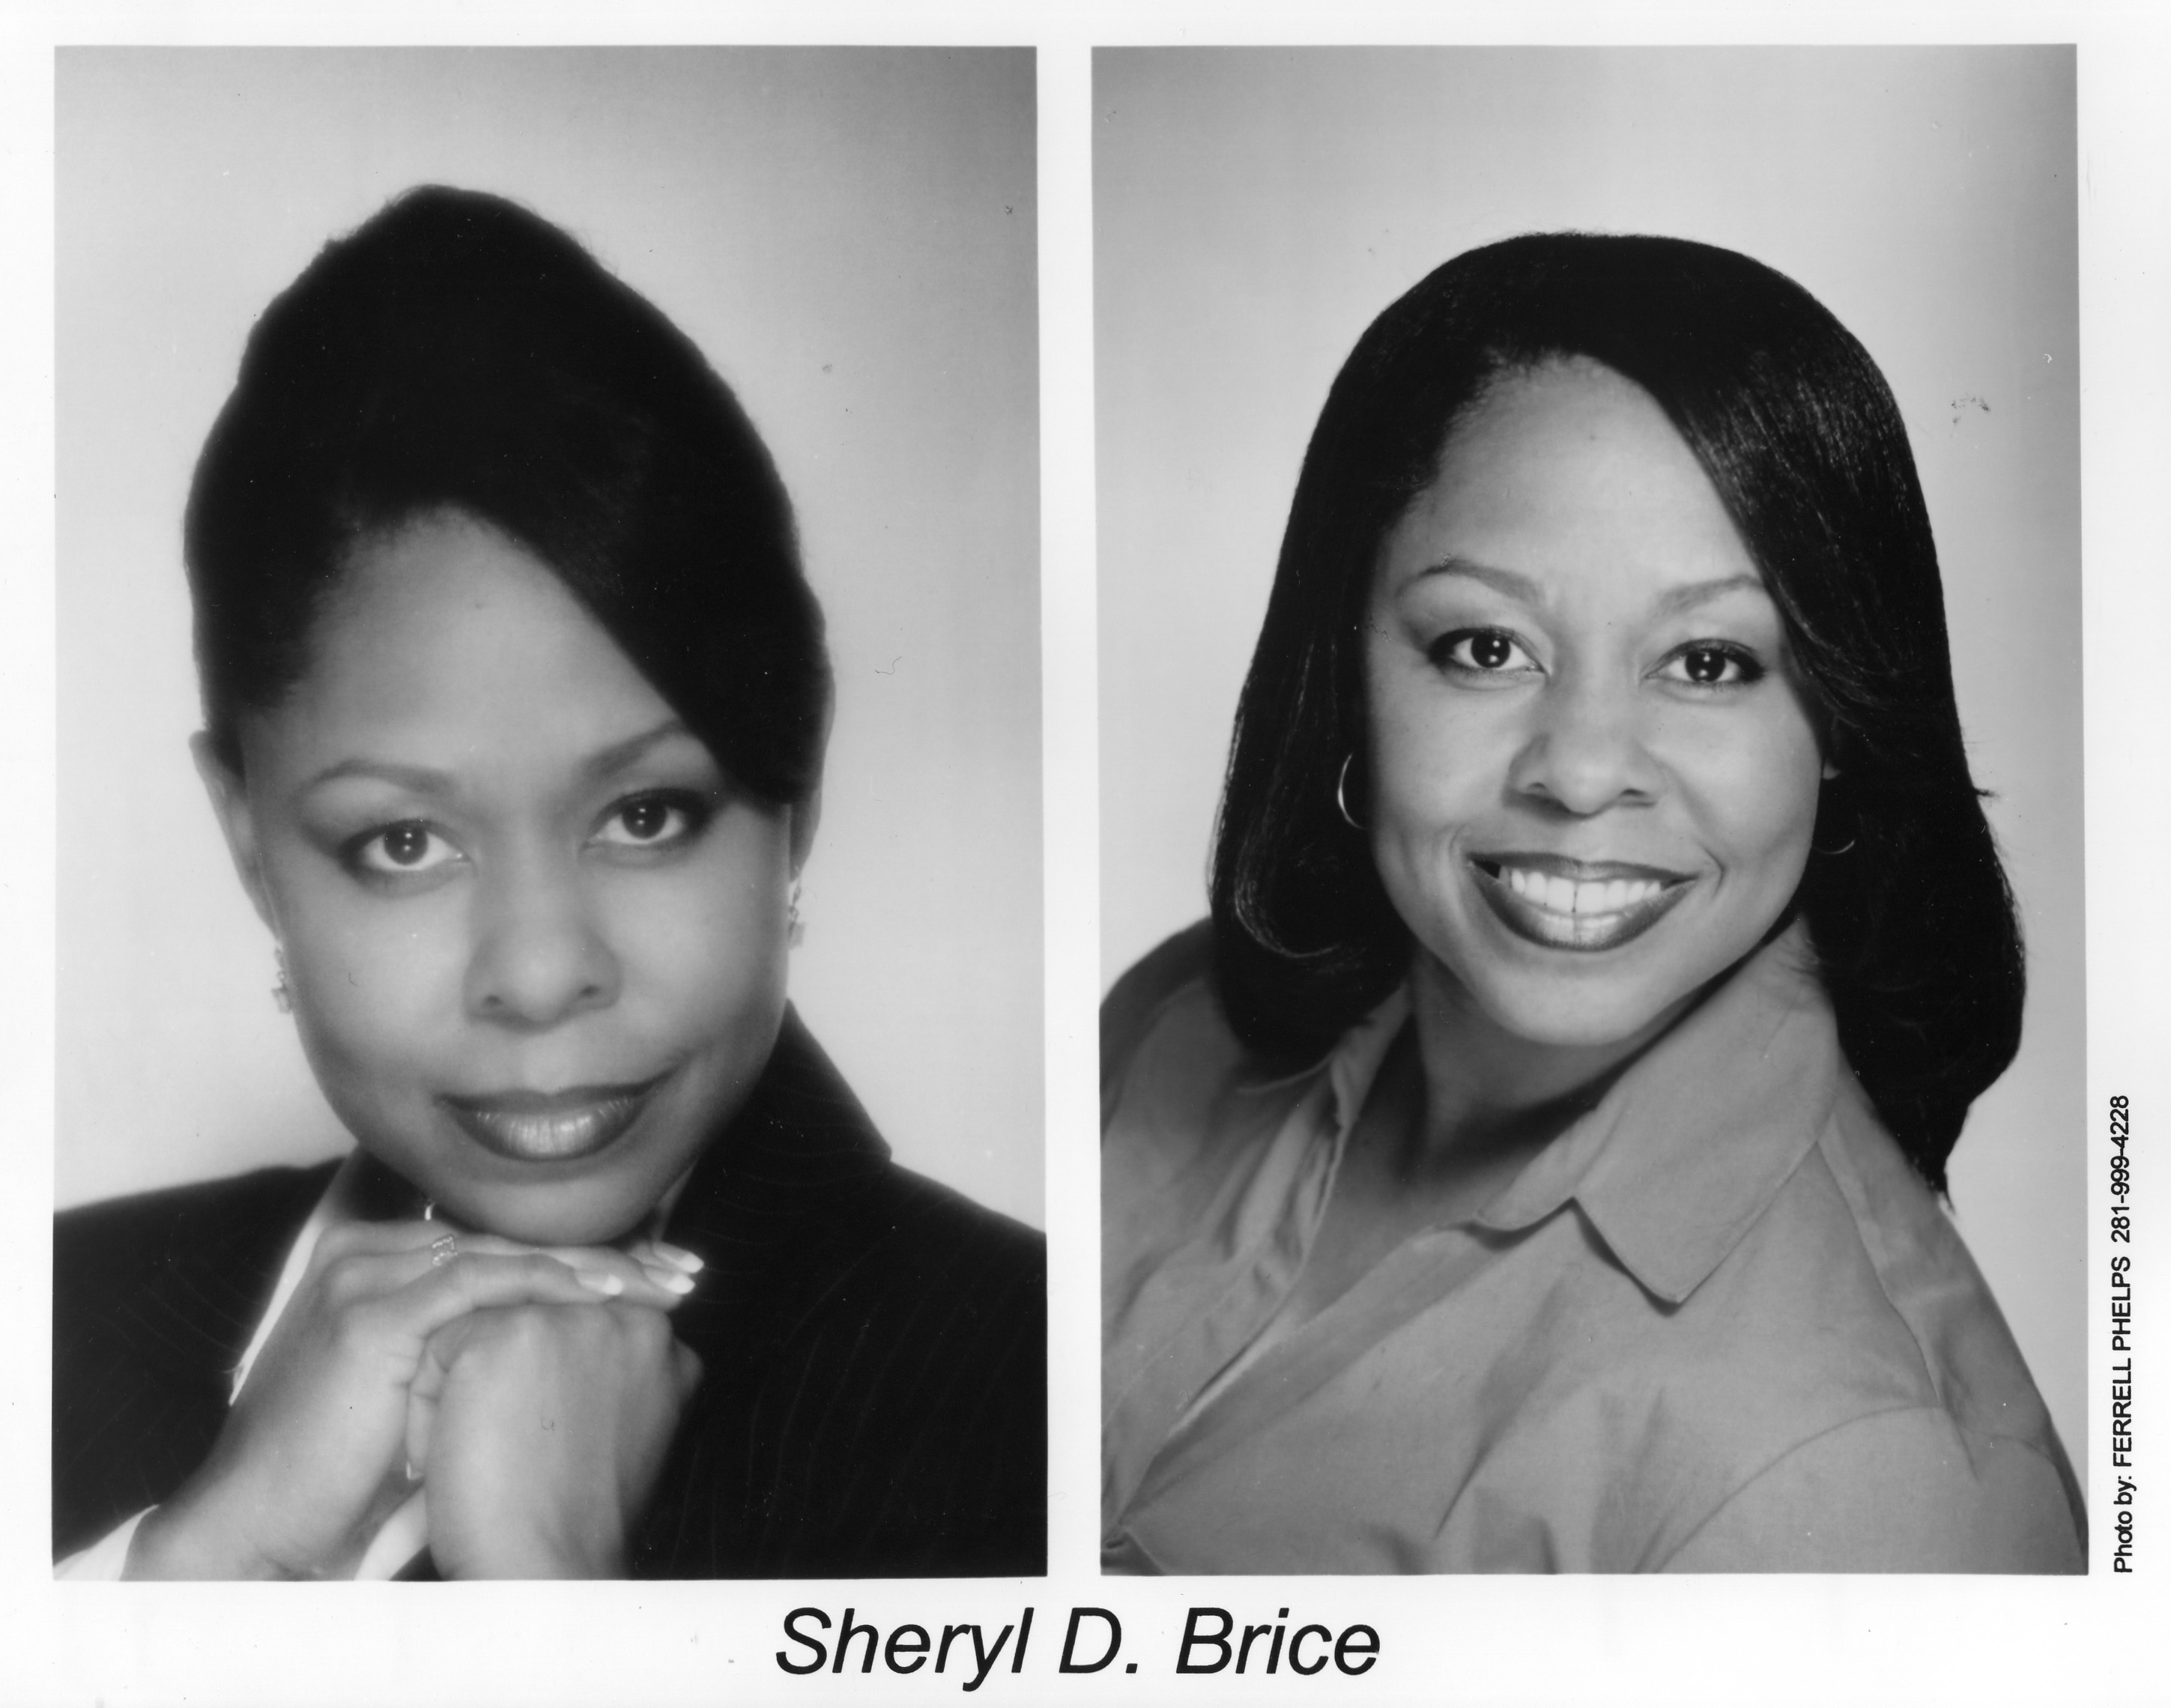 Sheryl D. Brice